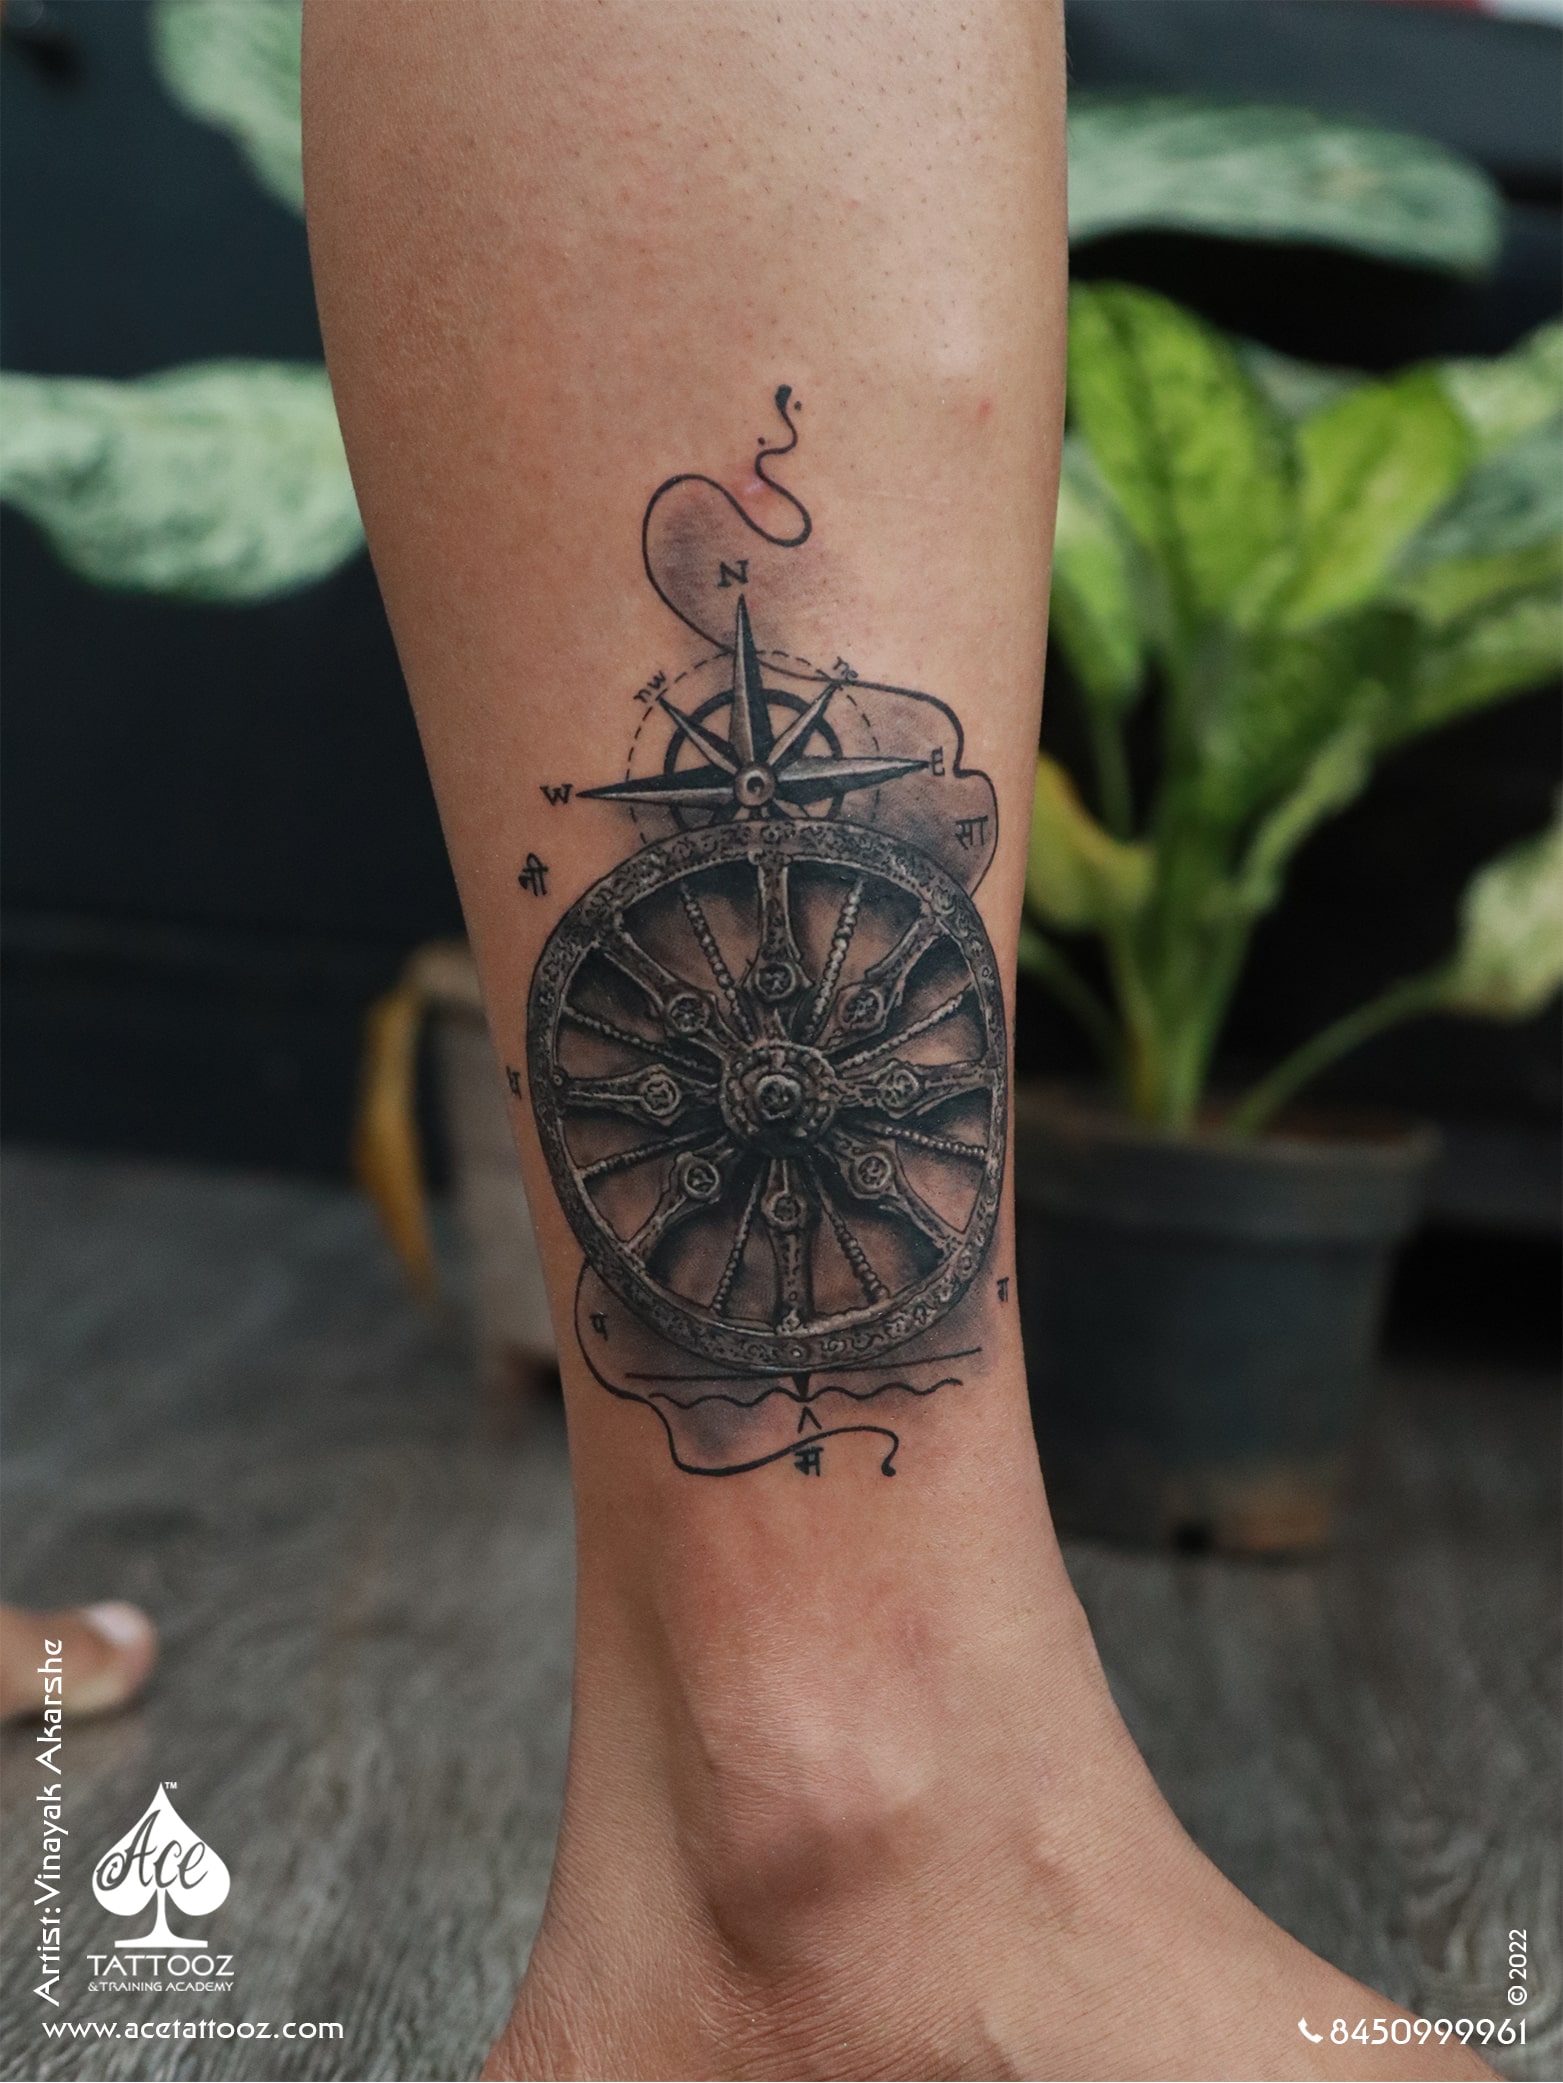 Wanted to share my new dharma wheel tattoo : r/Buddhism